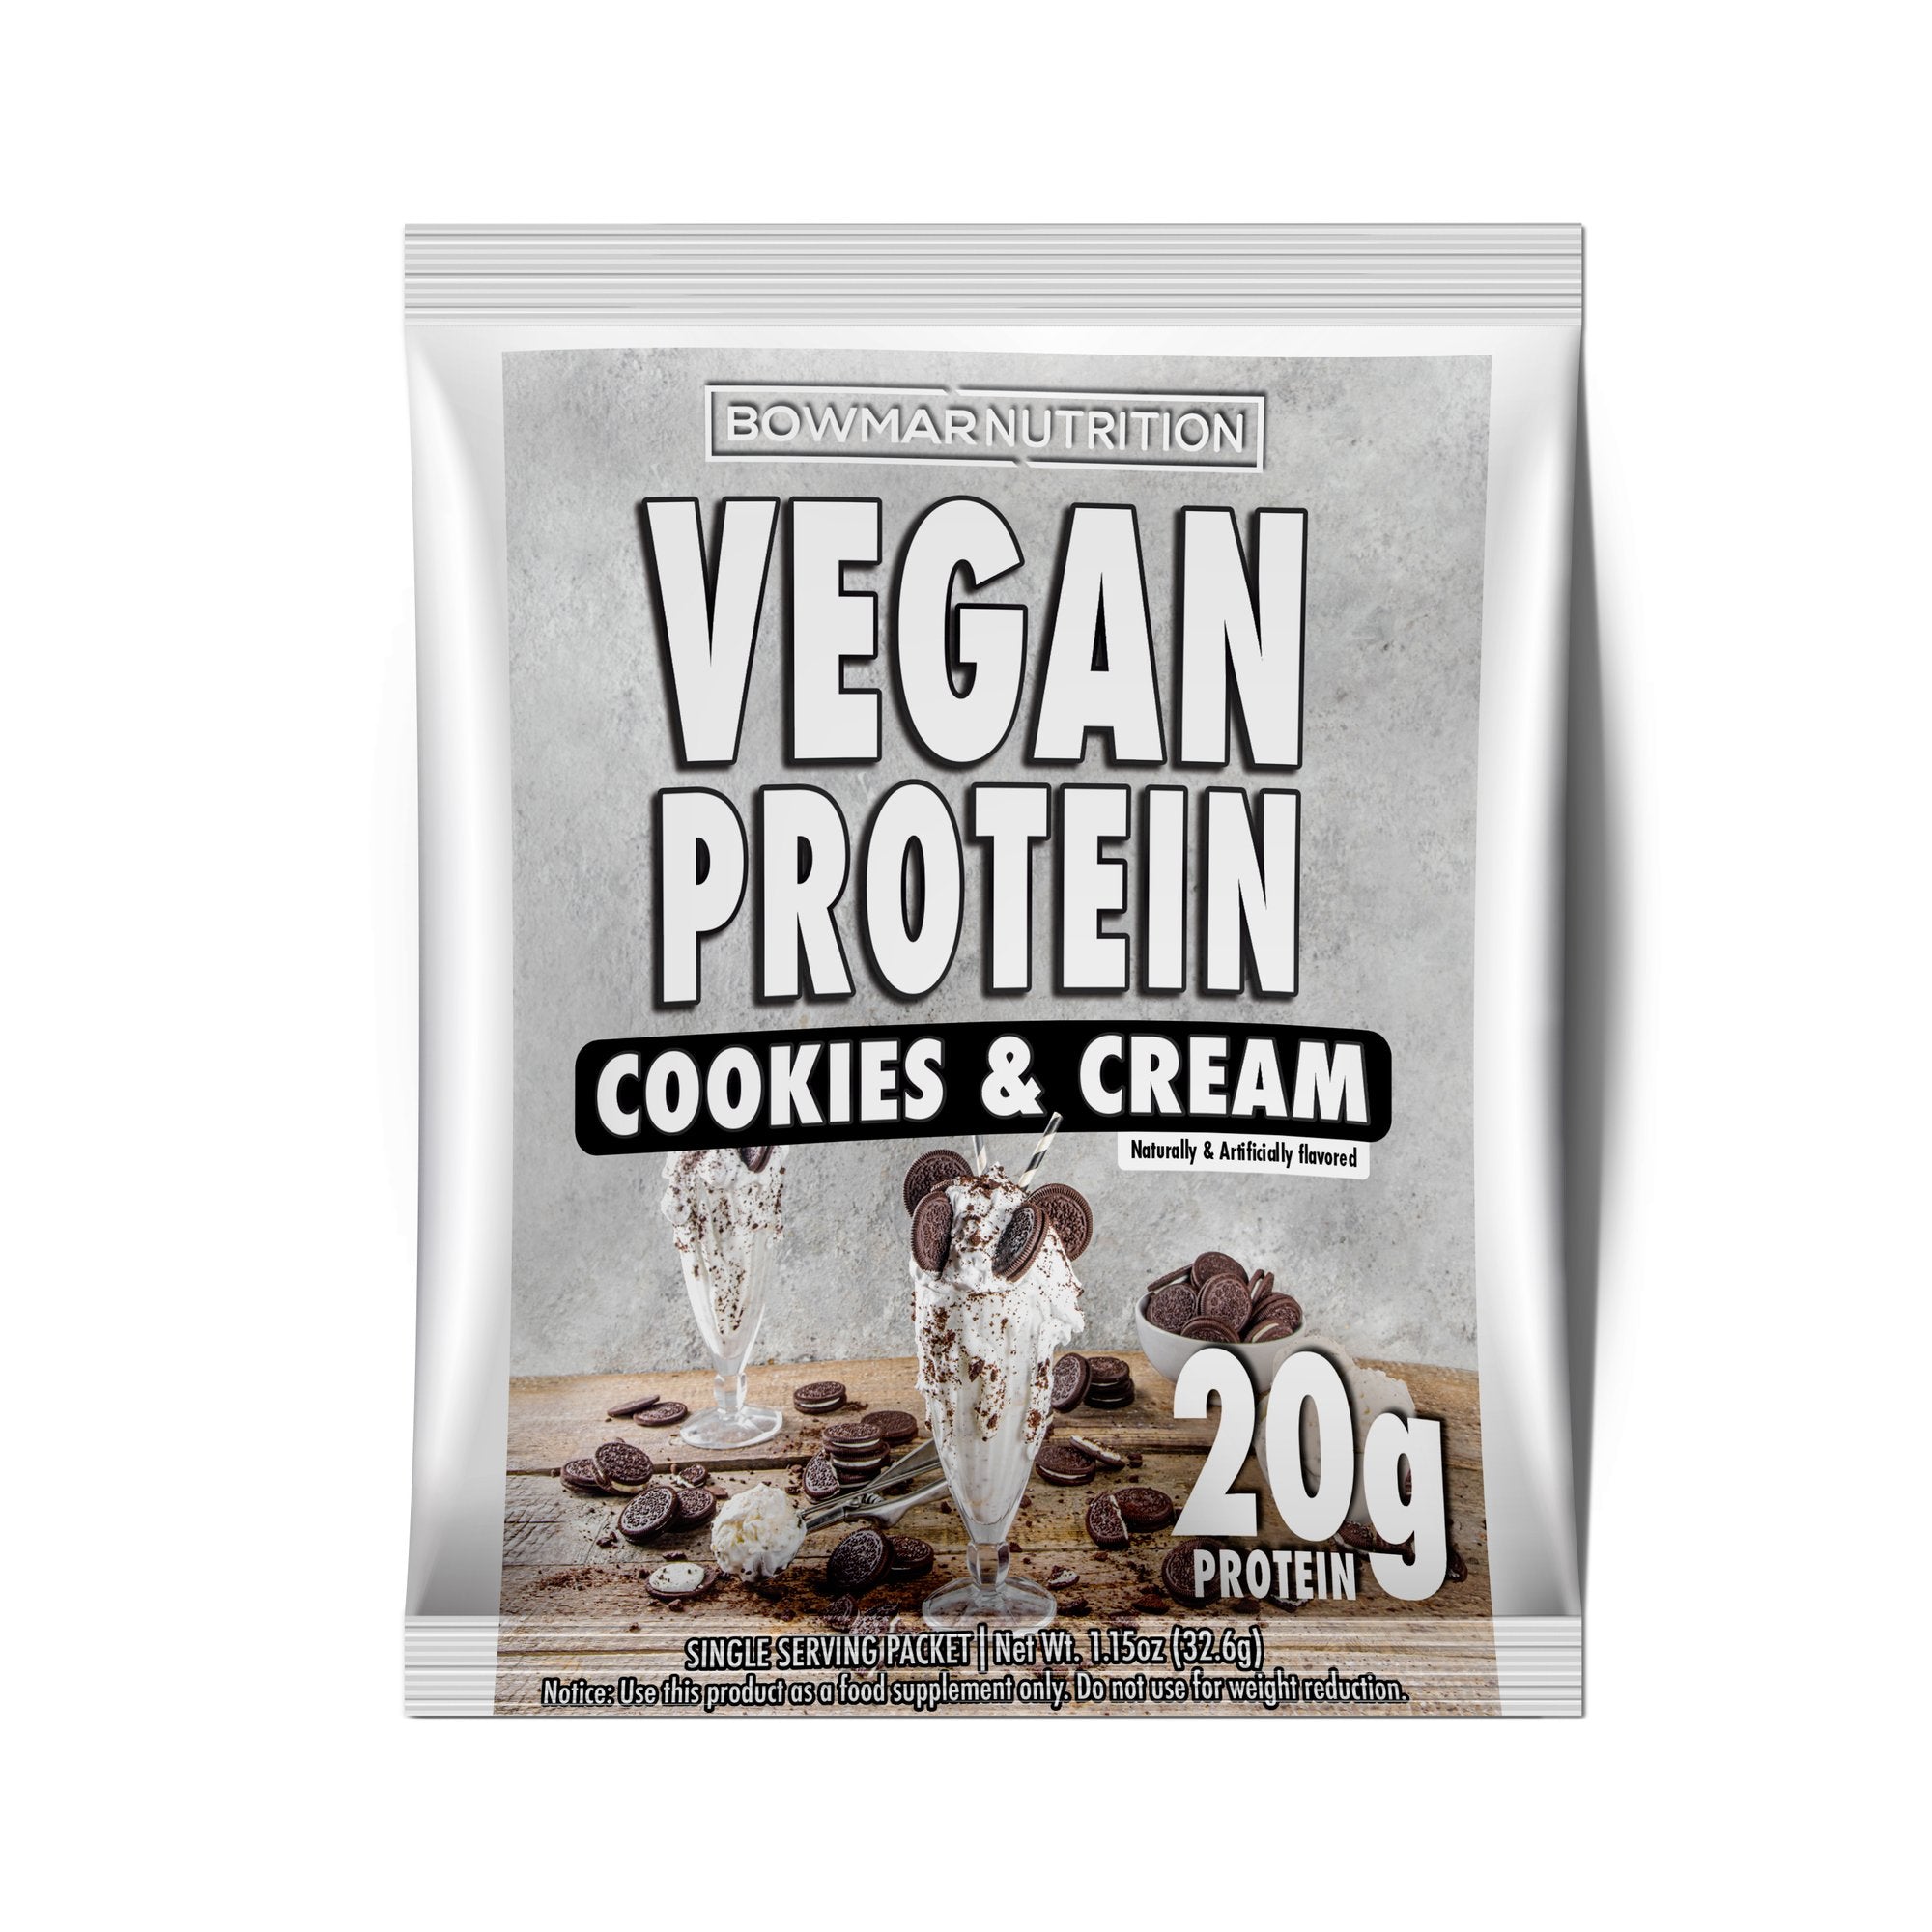 Bowmar VEGAN Protein Powder Sample (1 serving) Protein Snacks Cookies And Cream bowmar bowmar-vegan-protein-single-serving